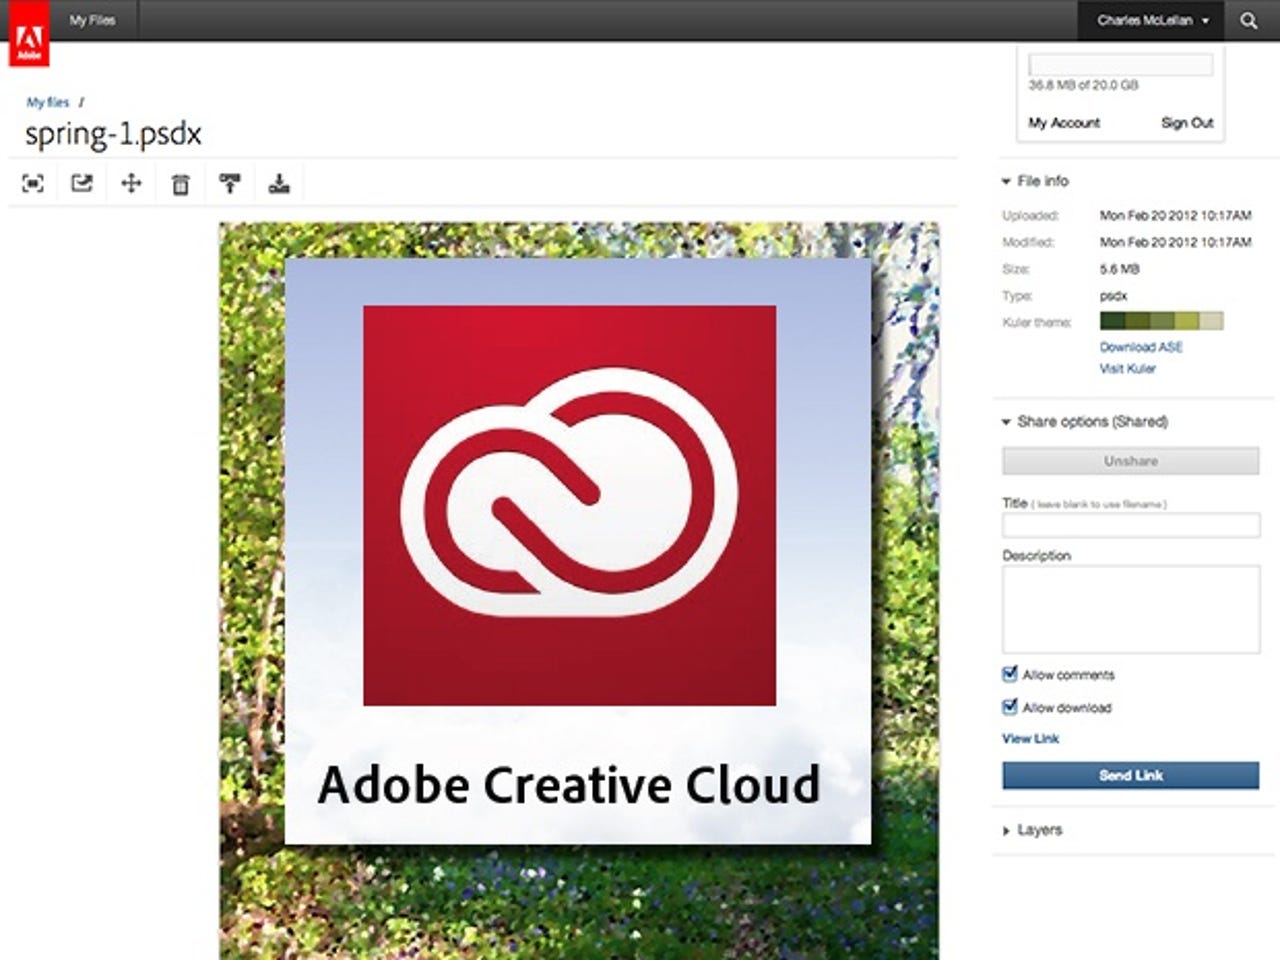 Adobe's Creative Cloud